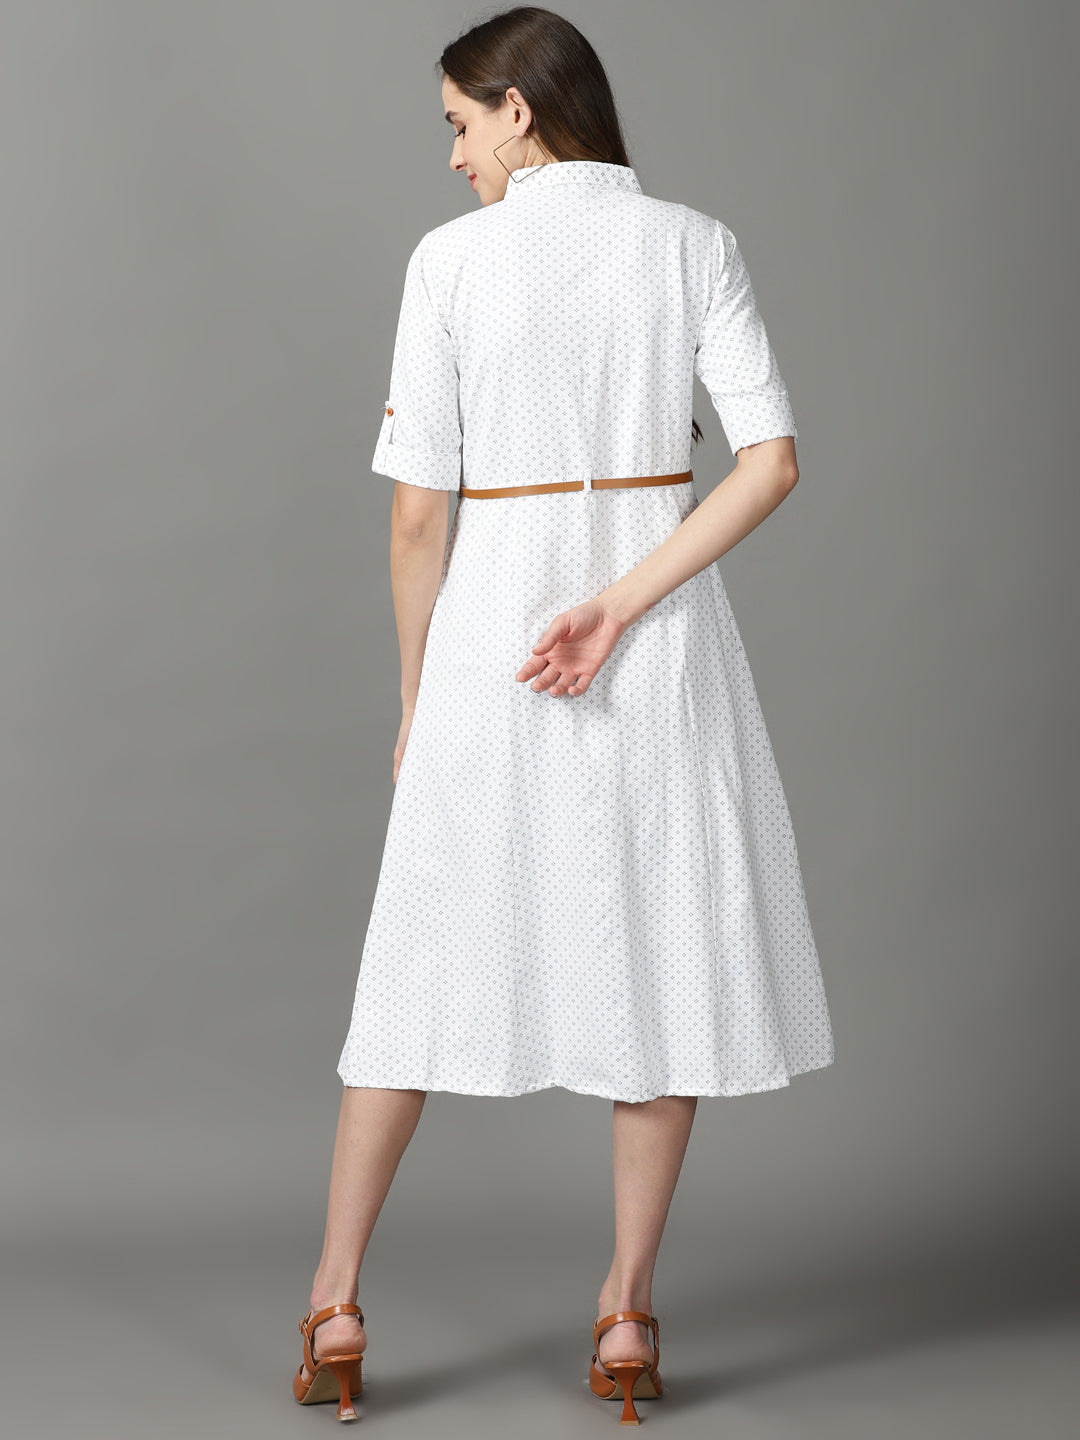 Women's White Printed A-Line Dress